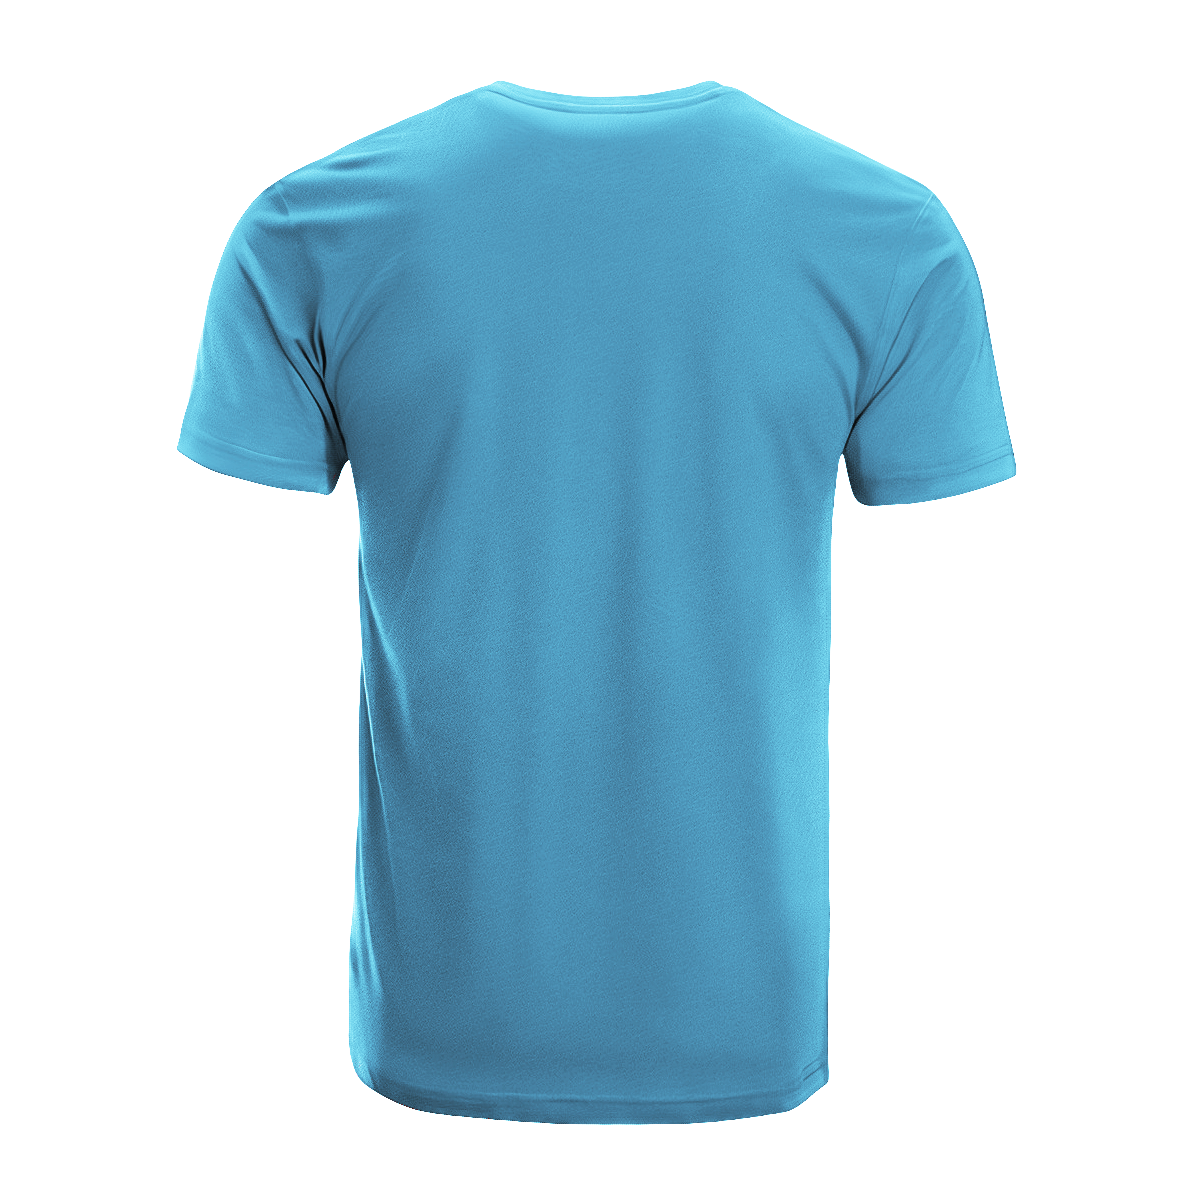 Kidd Tartan Crest T-shirt - I'm not yelling style